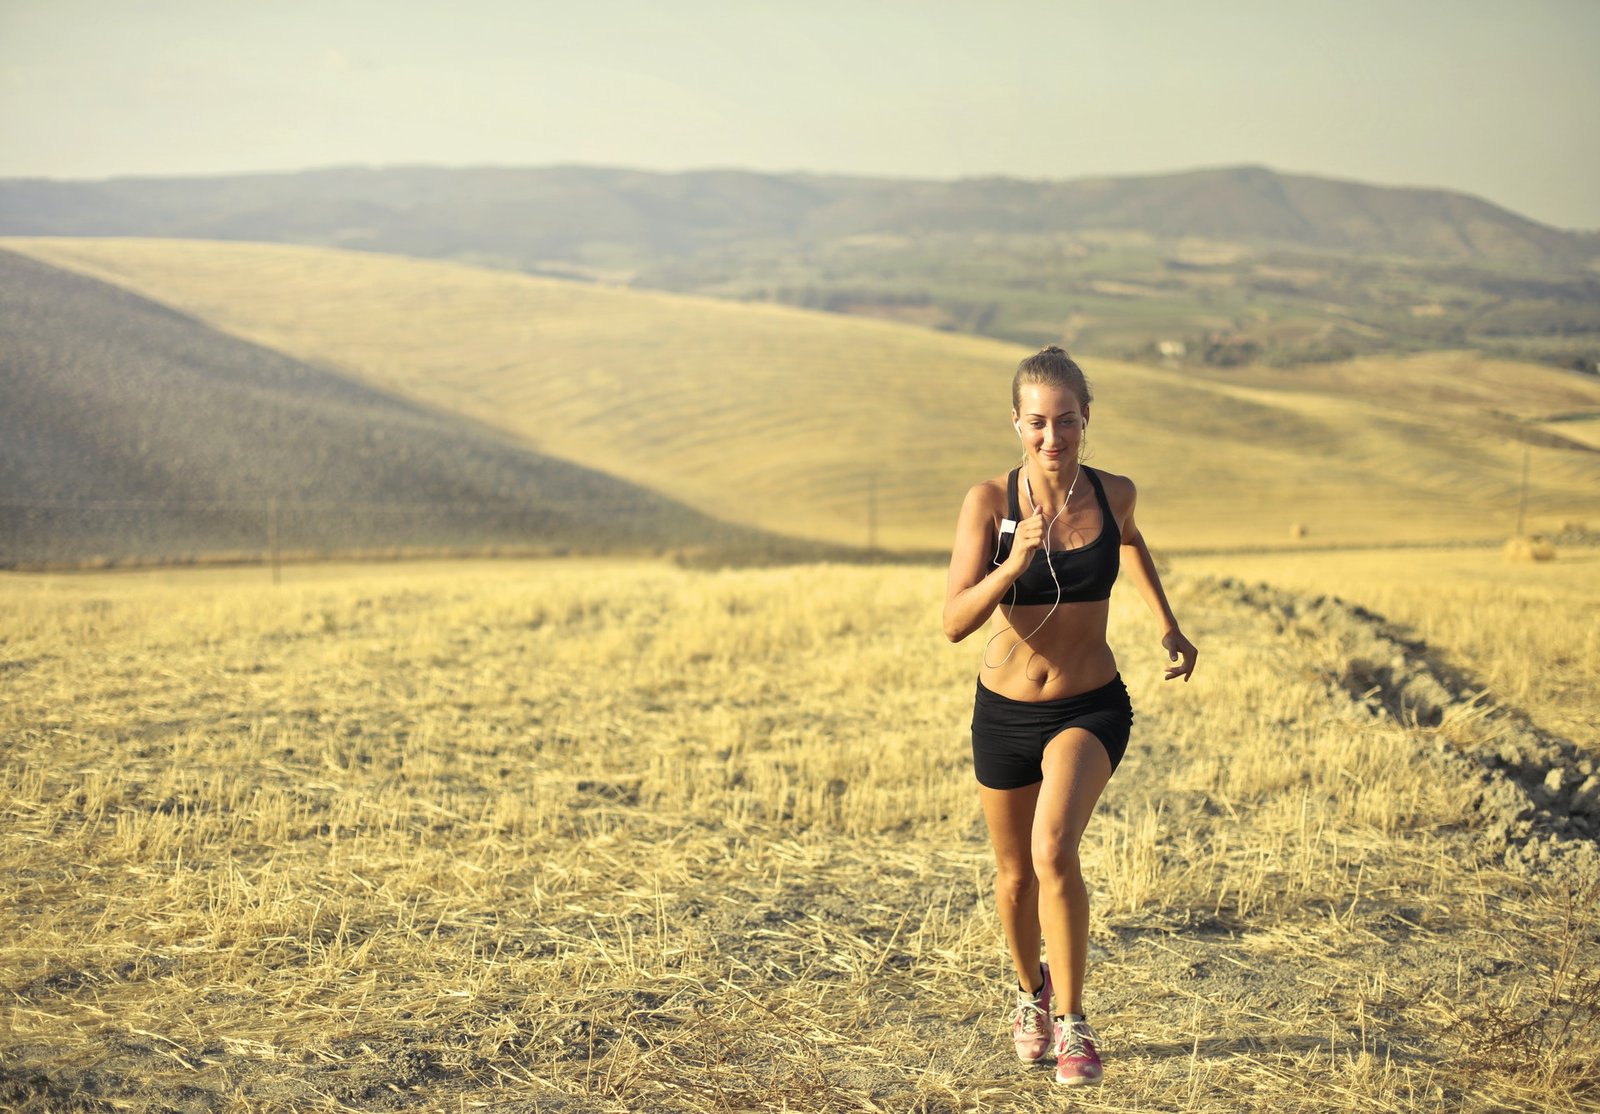 A woman running through an open field and enjoying the benefits of trail running.